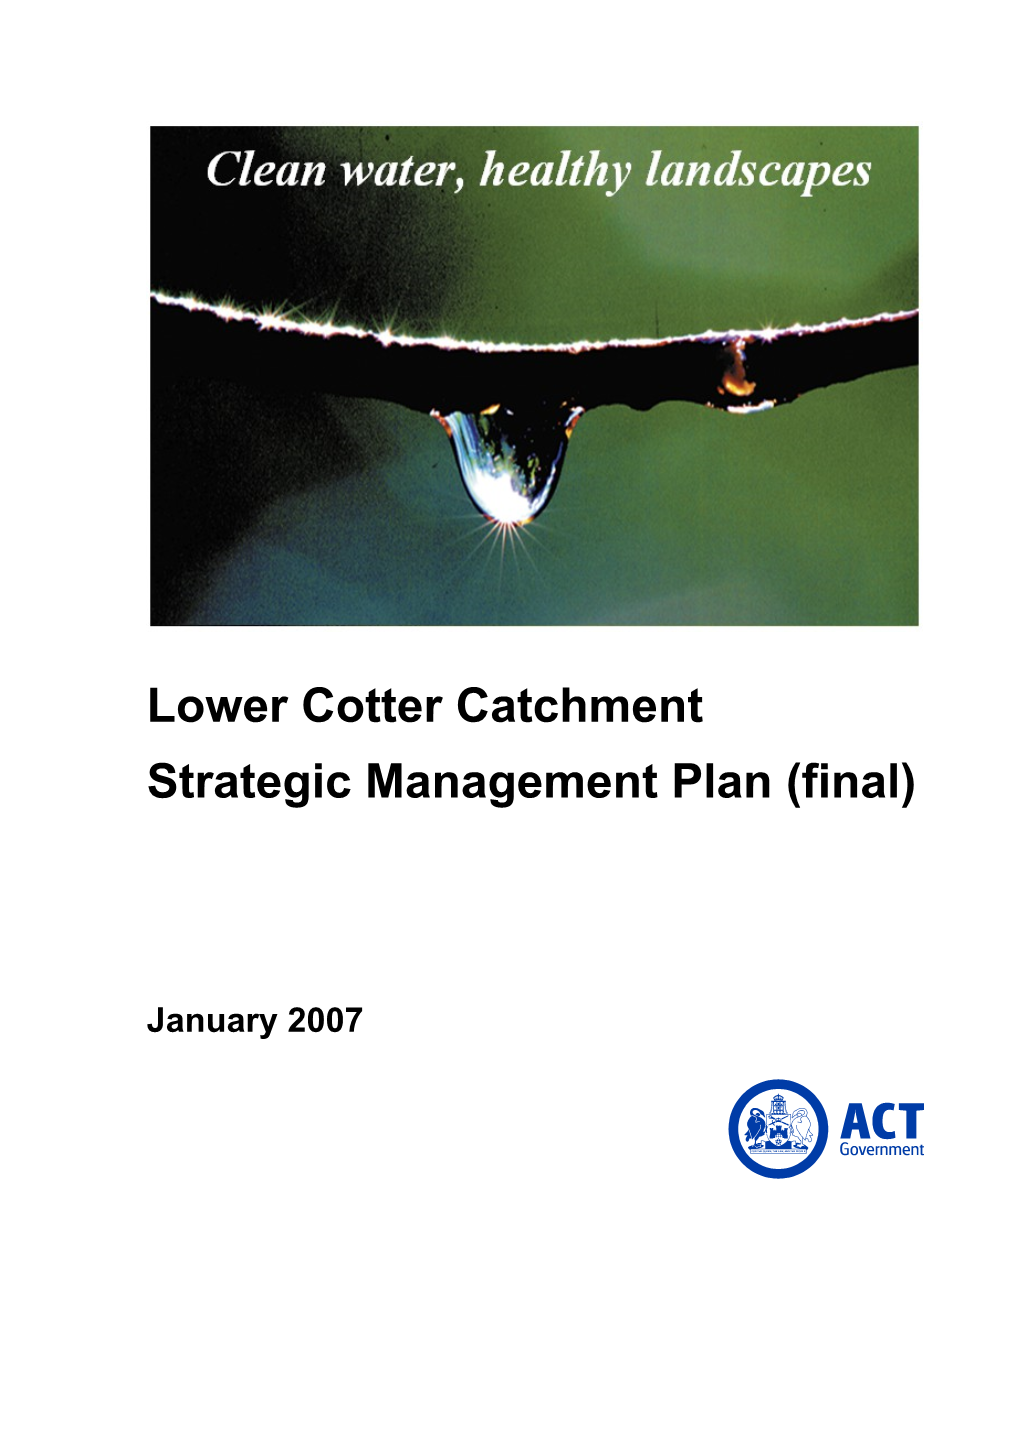 Lower Cotter Catchment Strategic Management Plan